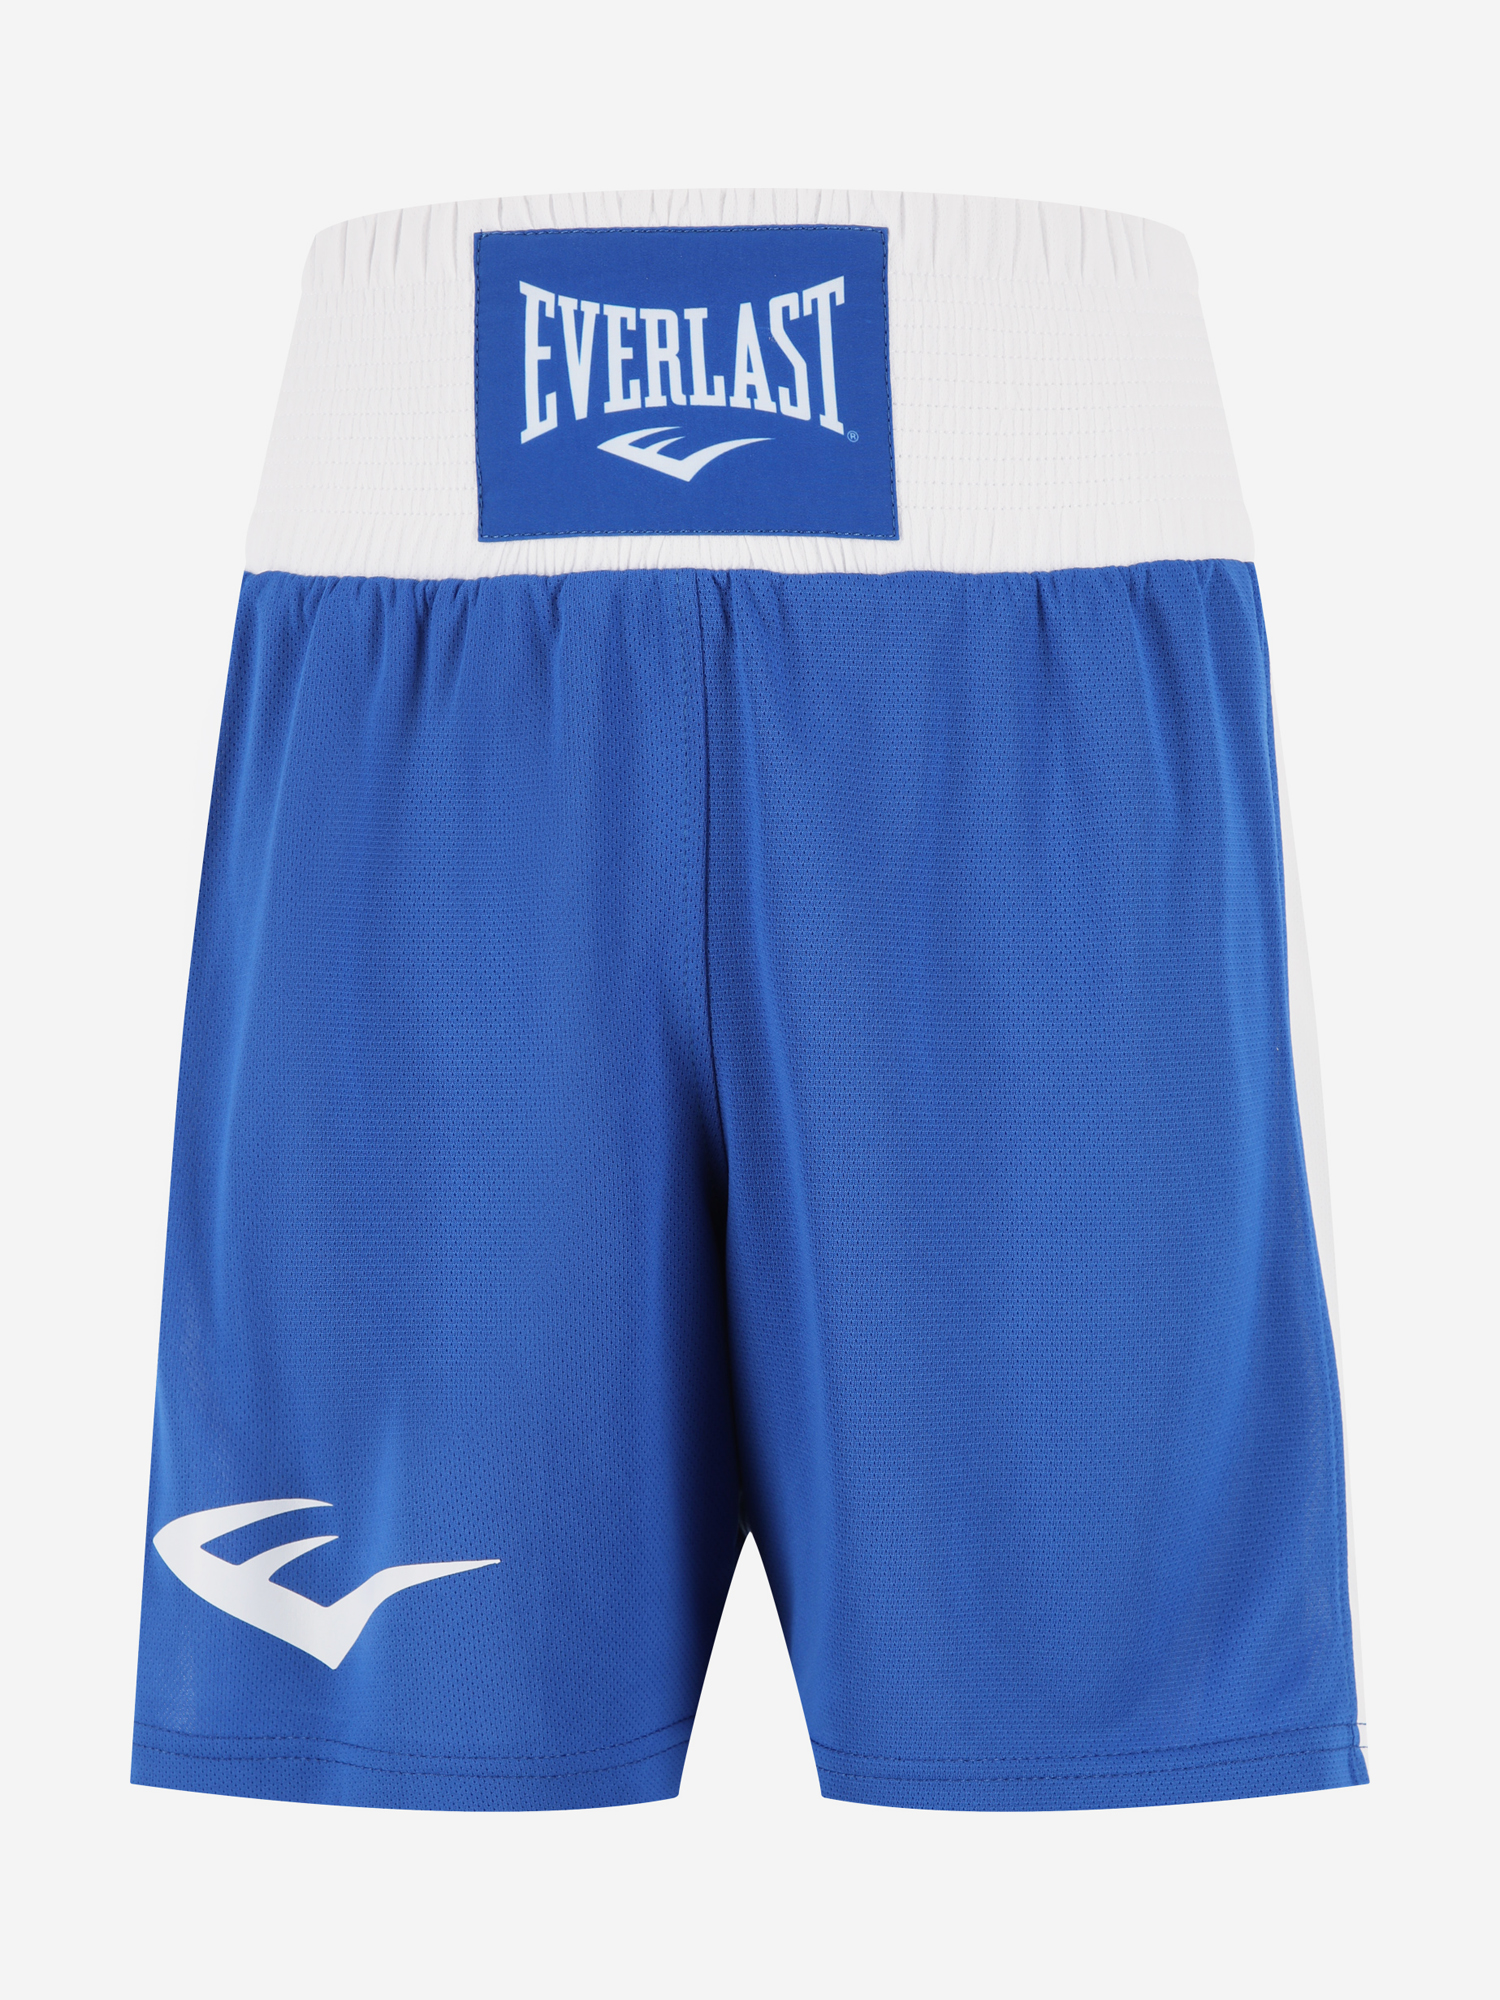 Шорты для бокса детские Everlast Elite, Синий боксерки мужские everlast competition boxing